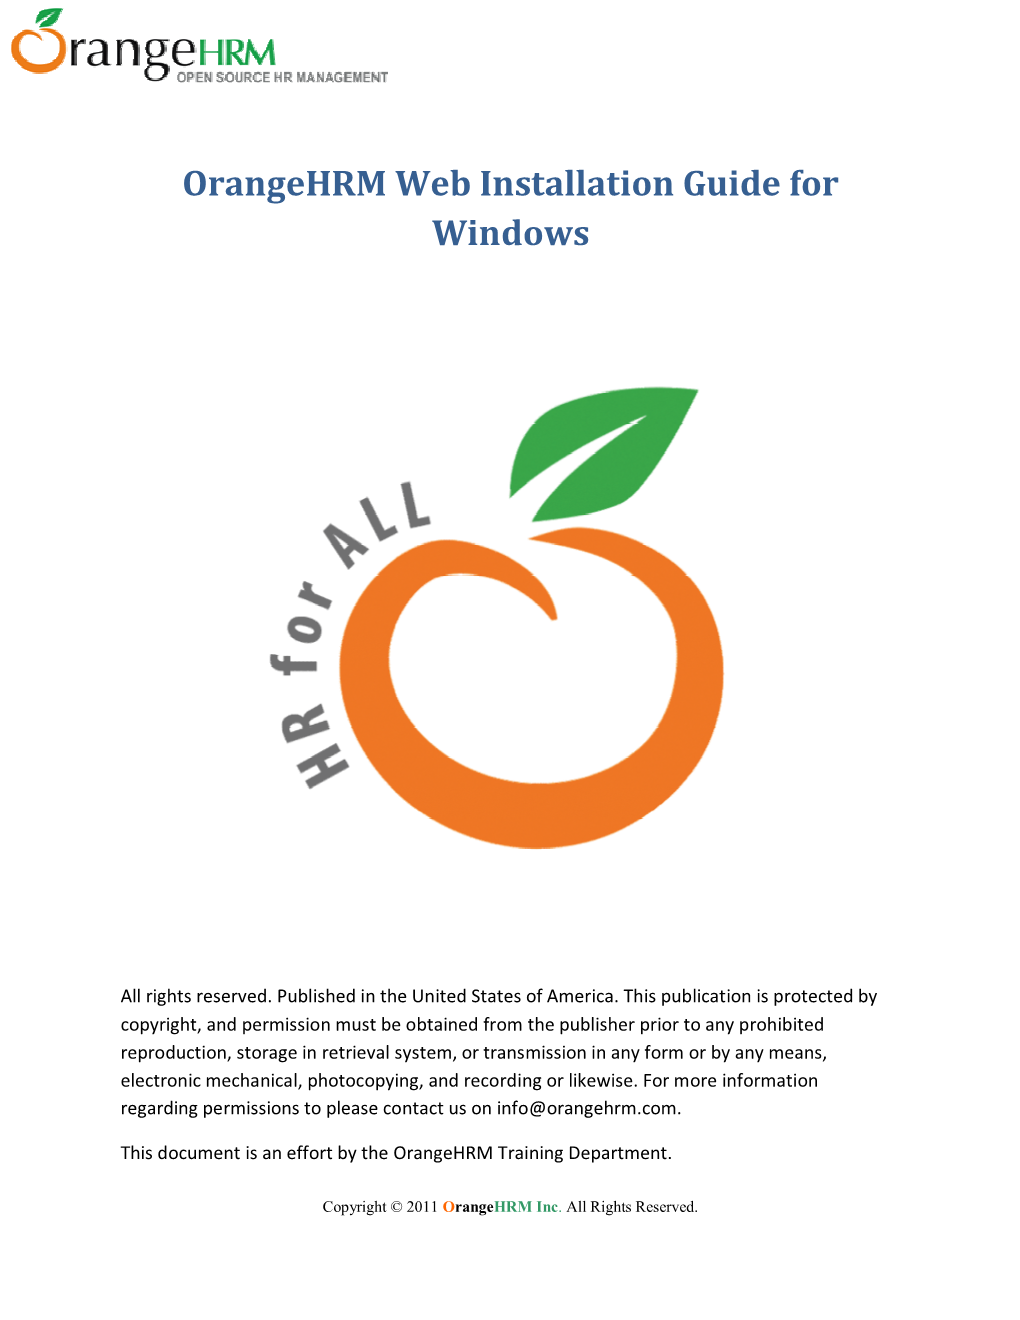 Orangehrm Web Installation Guide for Windows